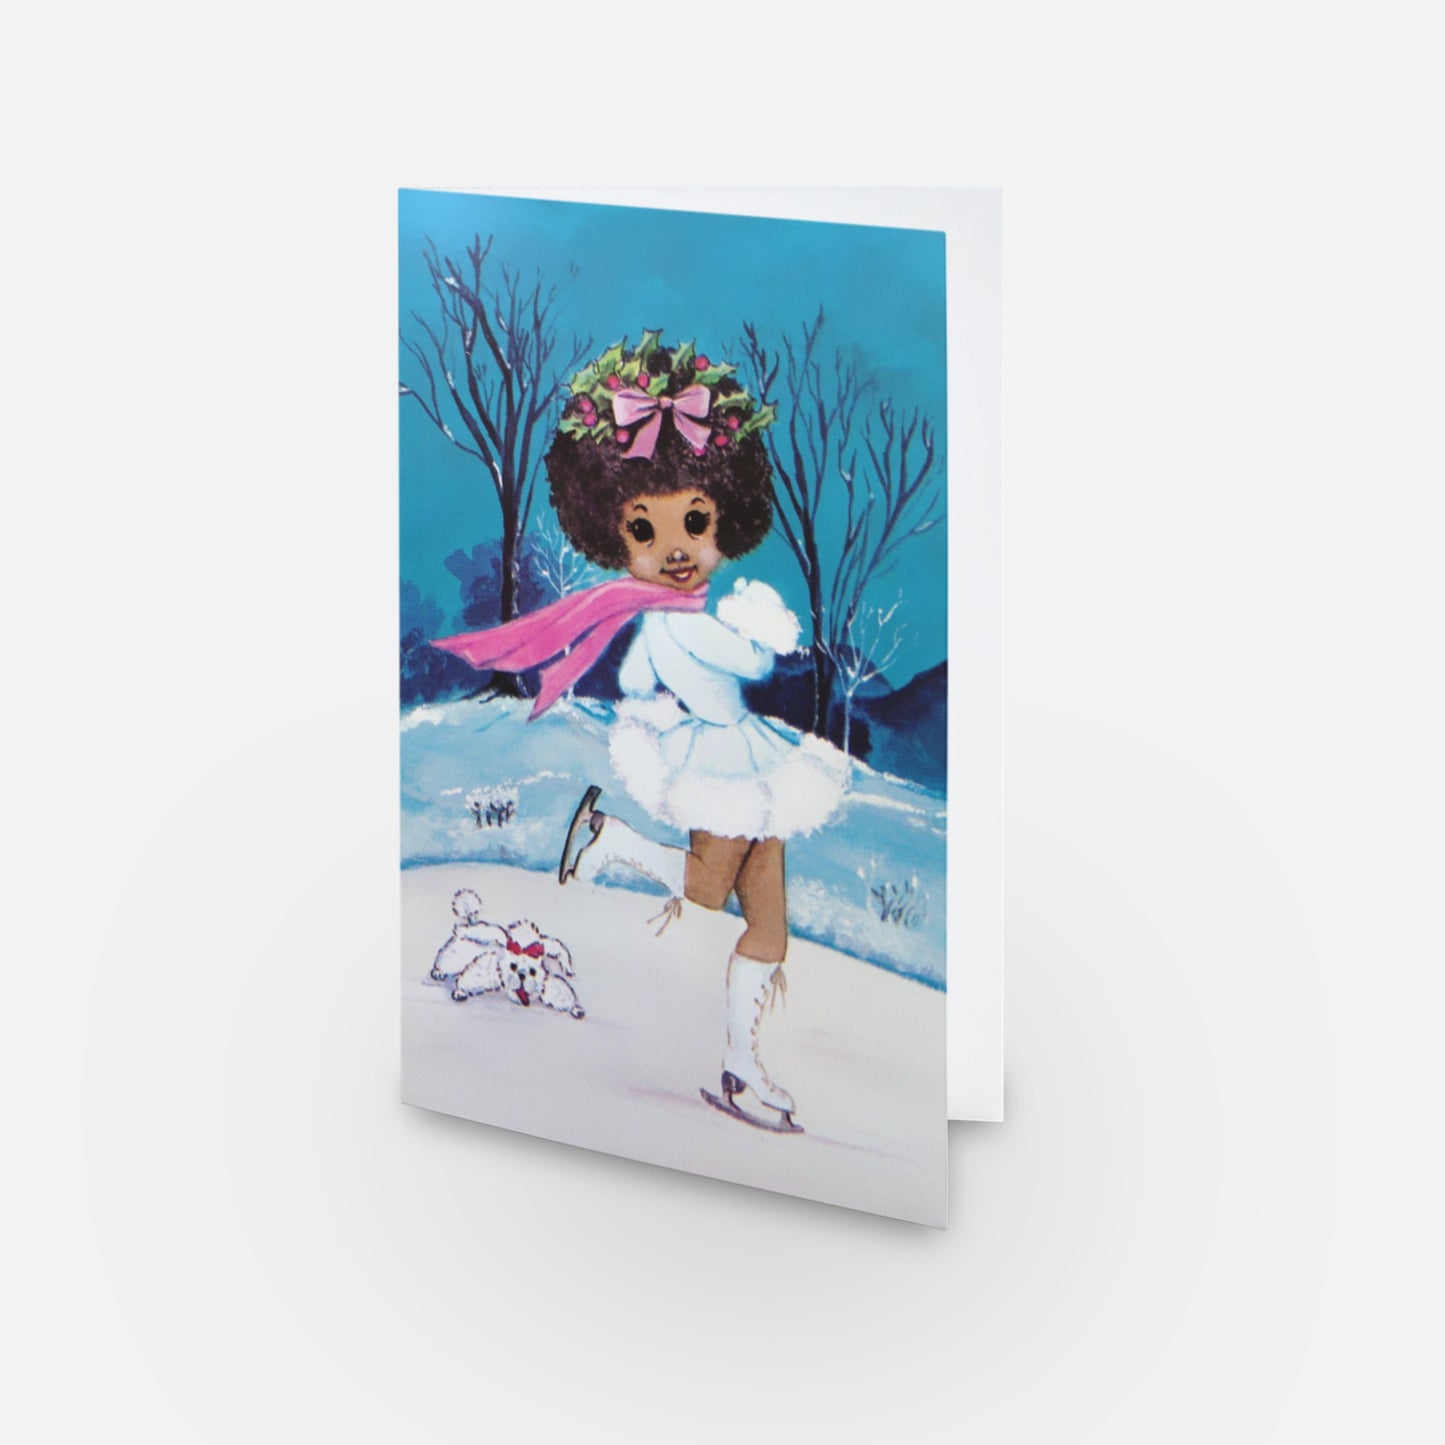 “Winter Wonderland”, Black Christmas Greeting Card